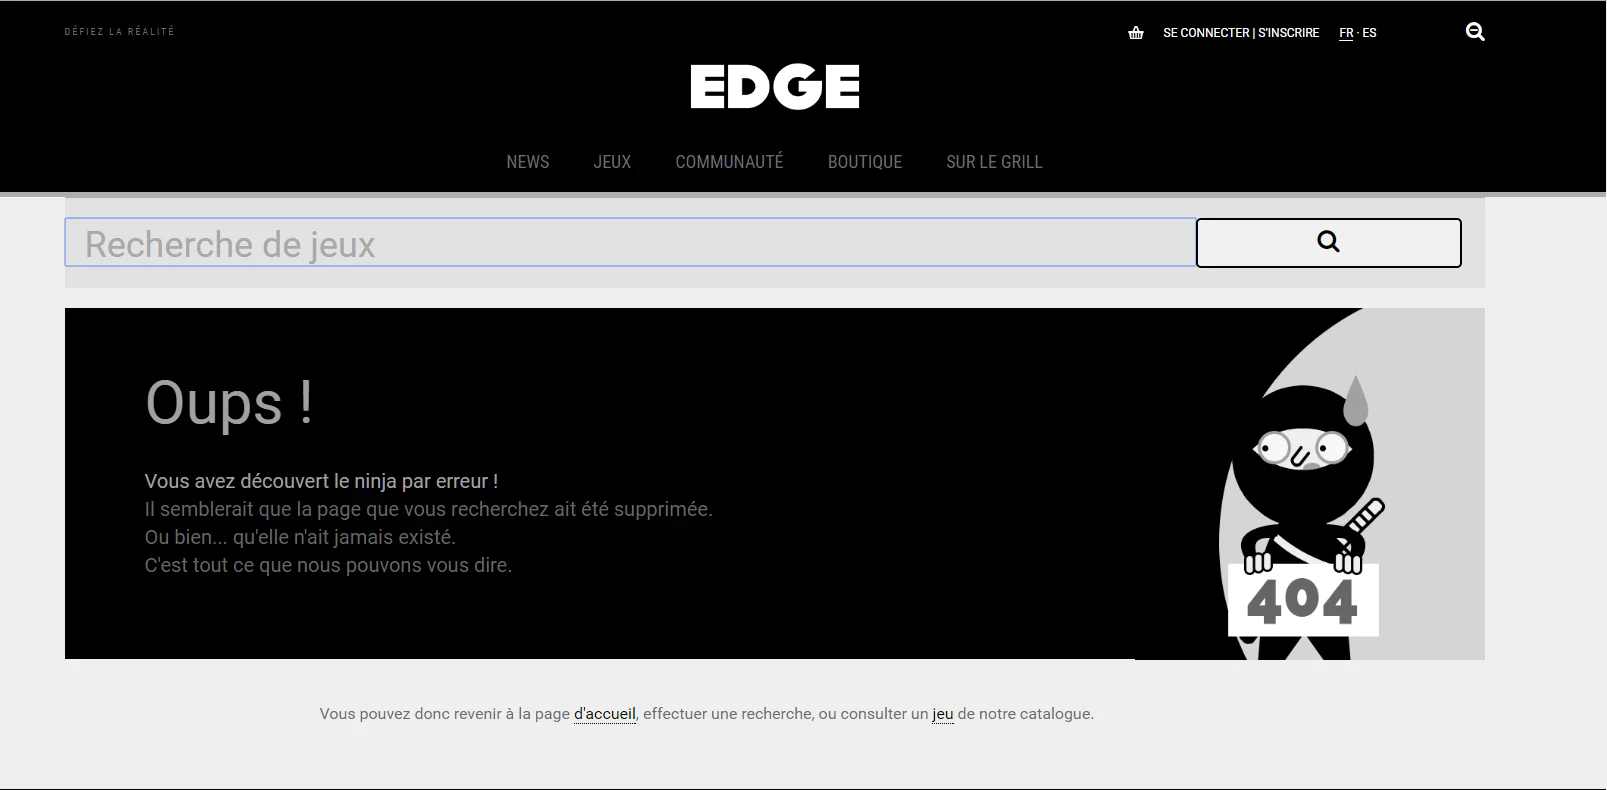 SEO page 404 edge